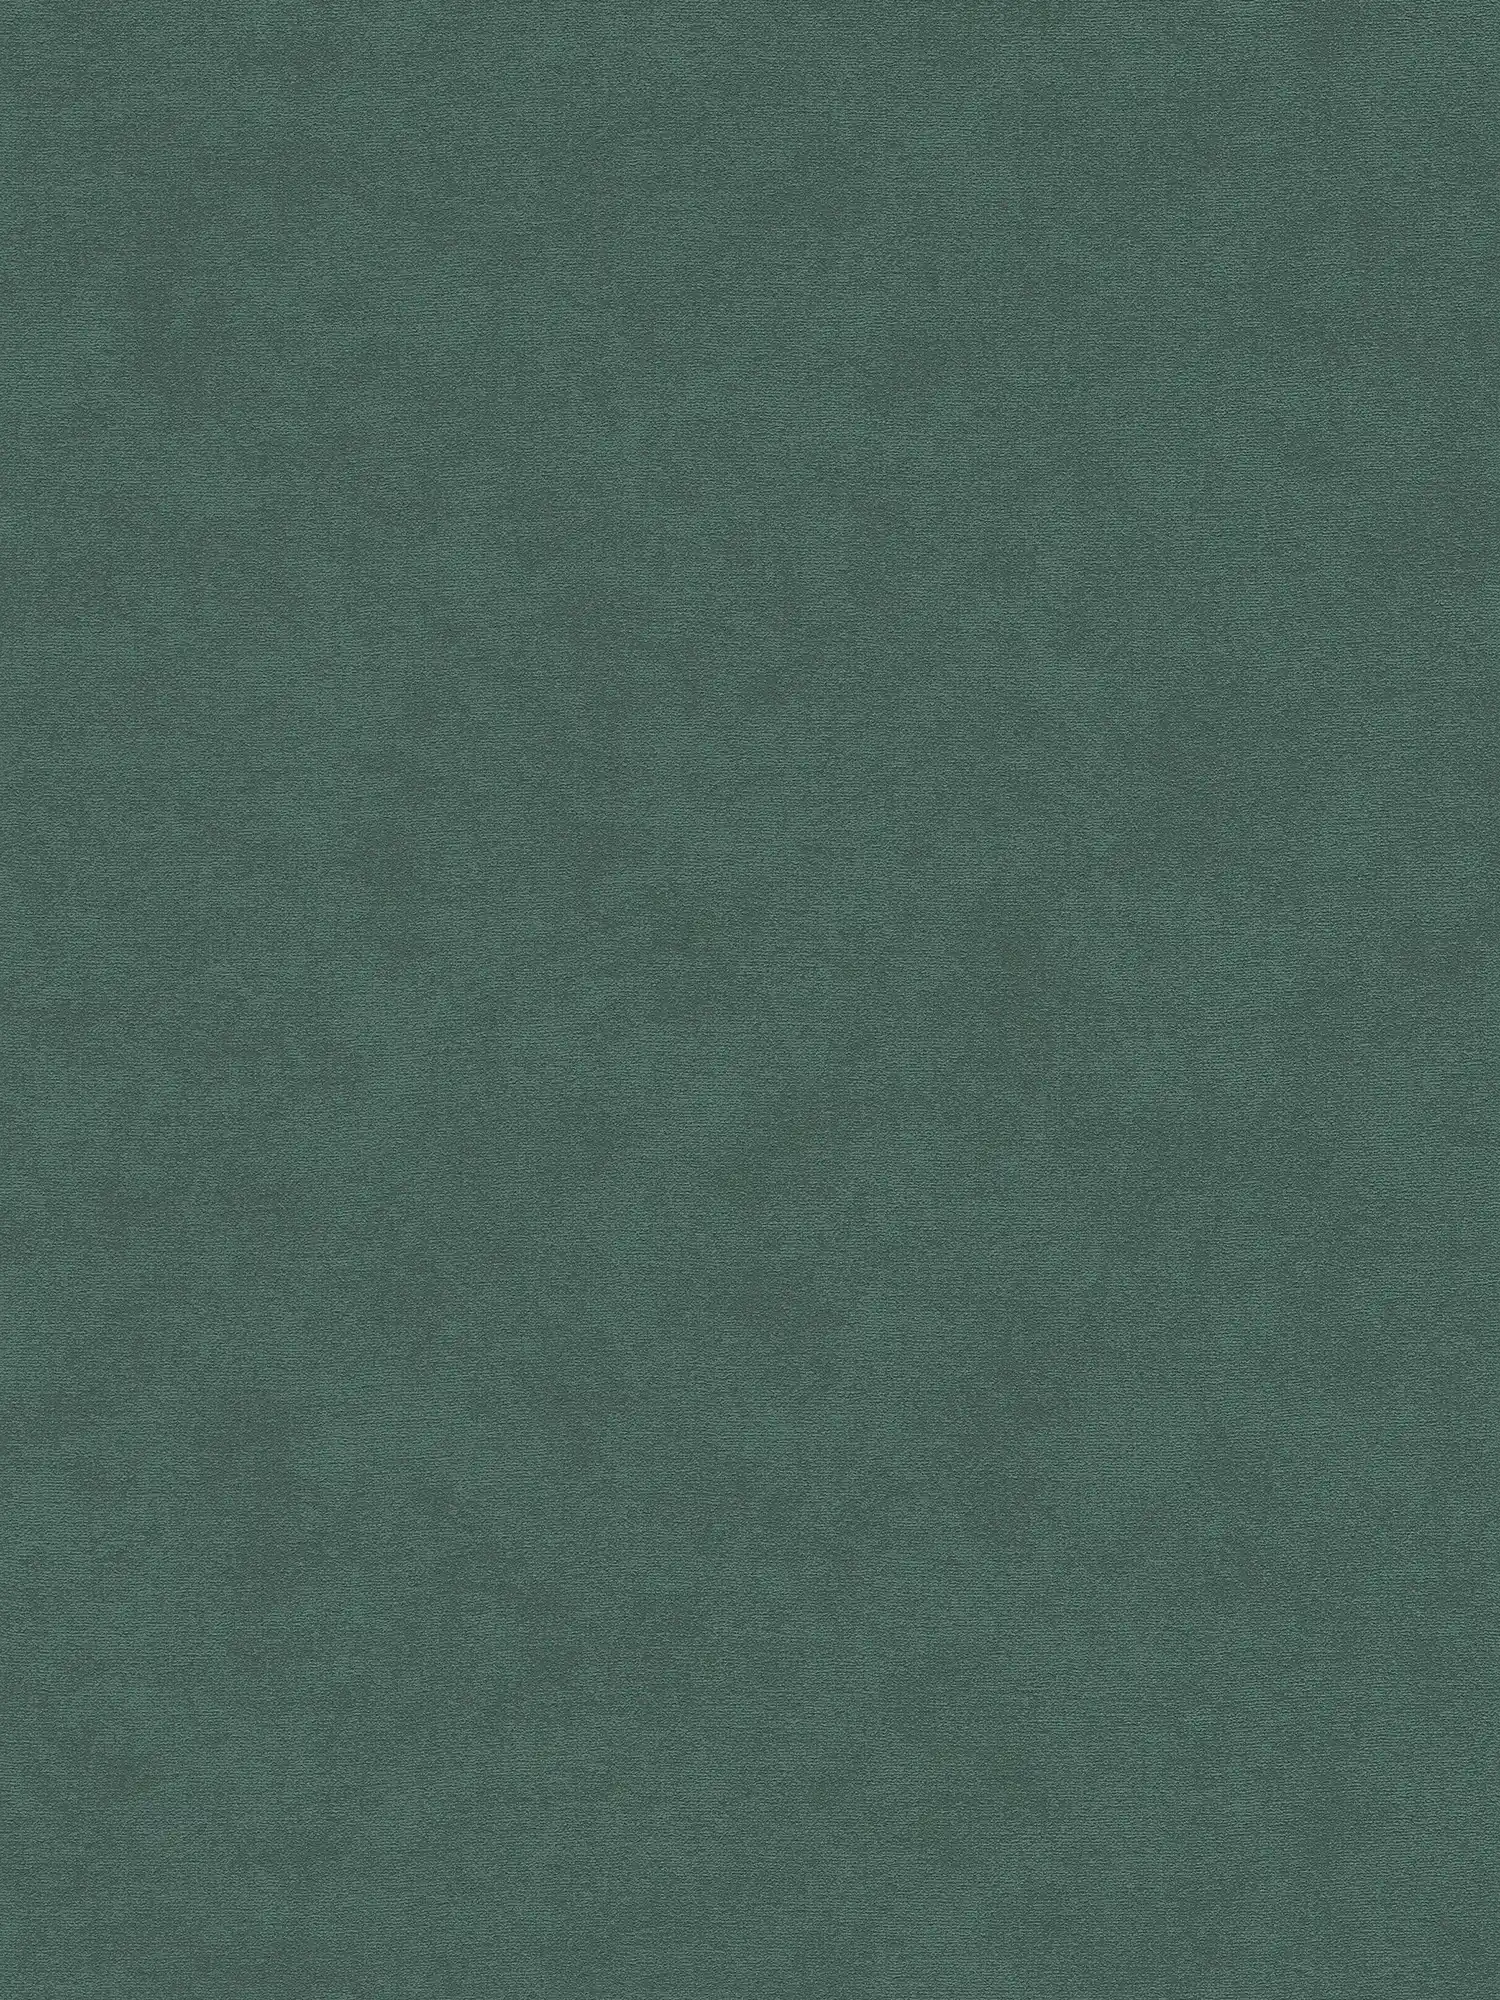 Carta da parati non tessuta a trama leggera, monocolore - verde
